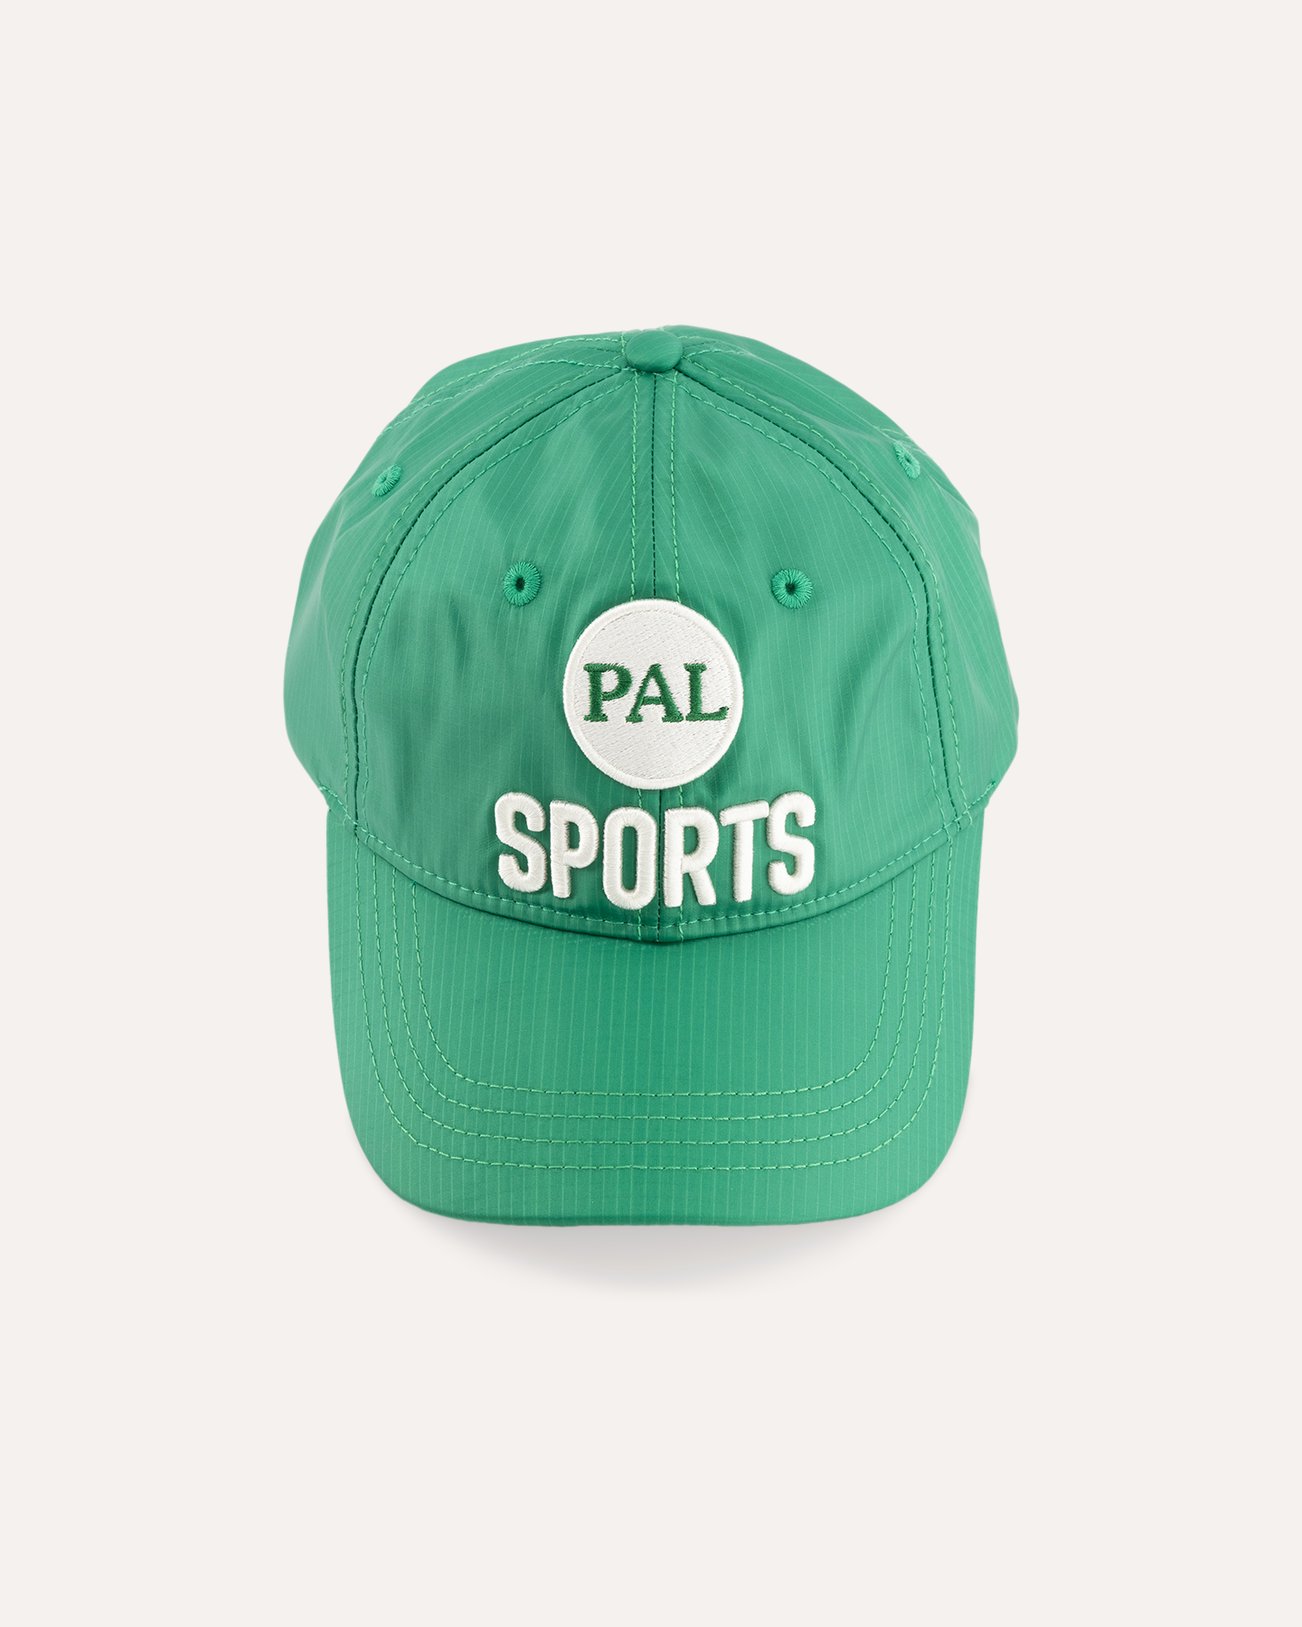 PAL Sporting Goods Broadcast Cap GROEN 1